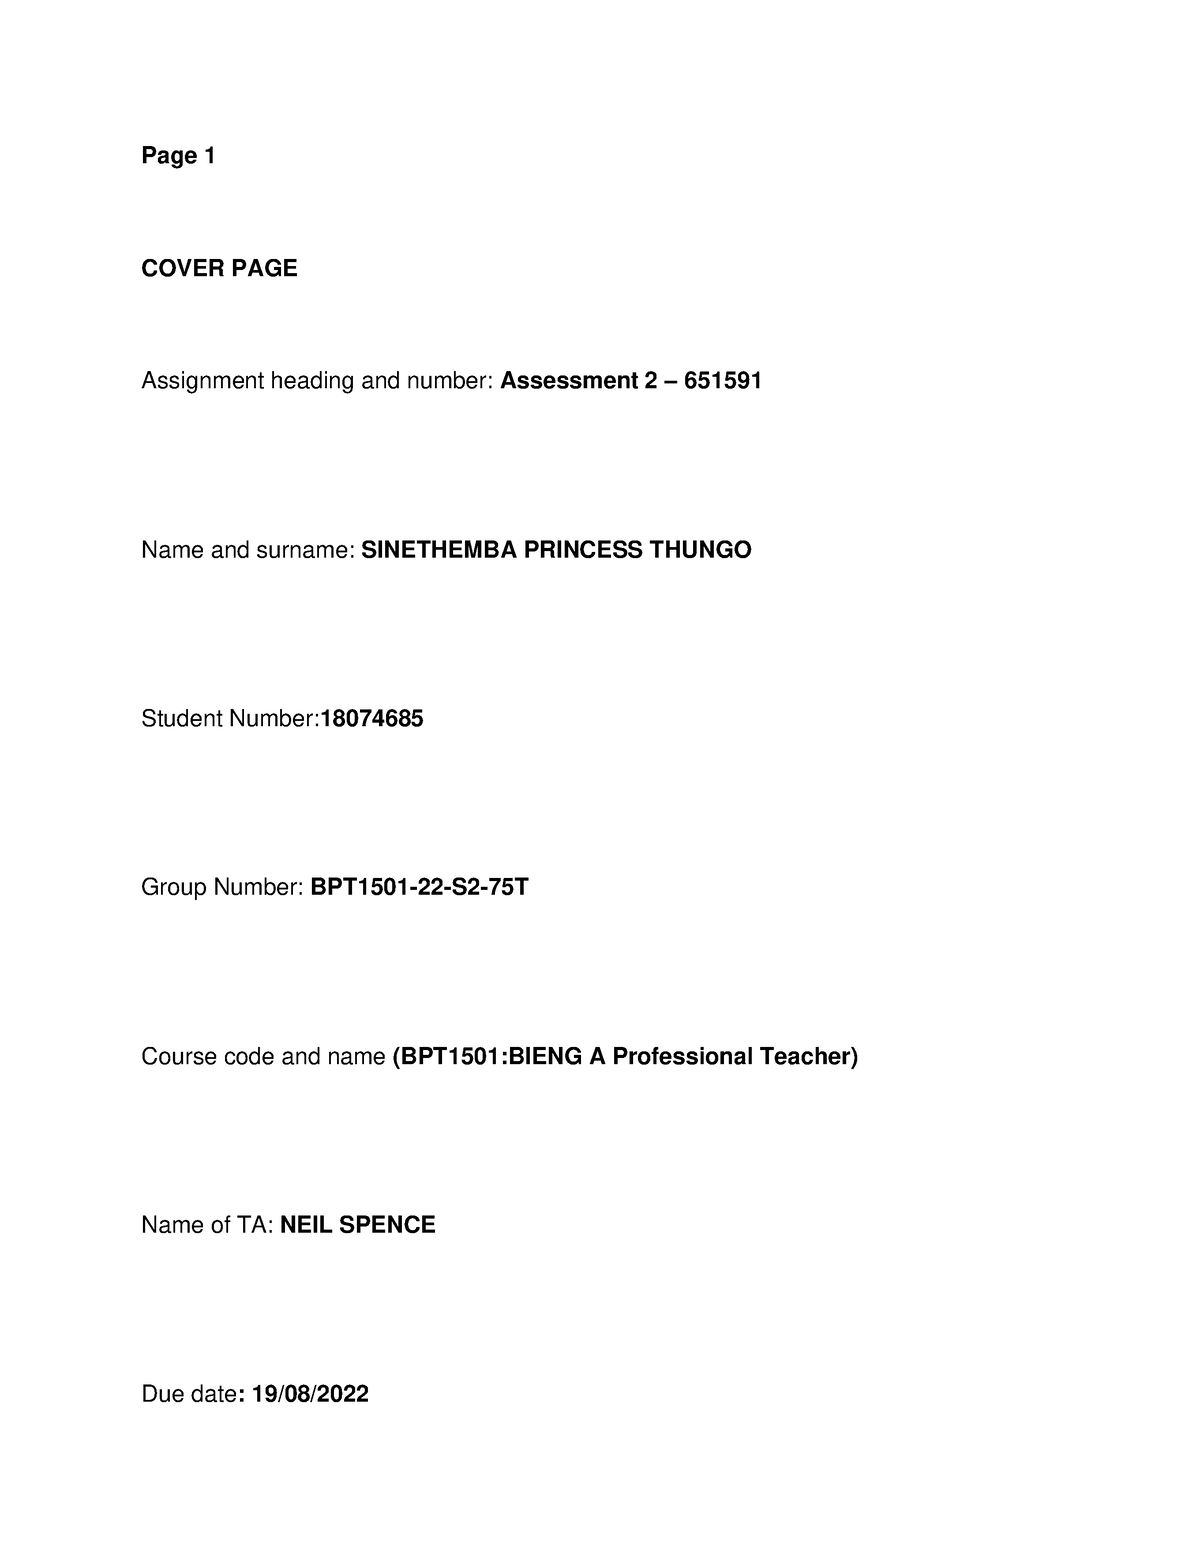 bpt1501 assignment 2 pdf